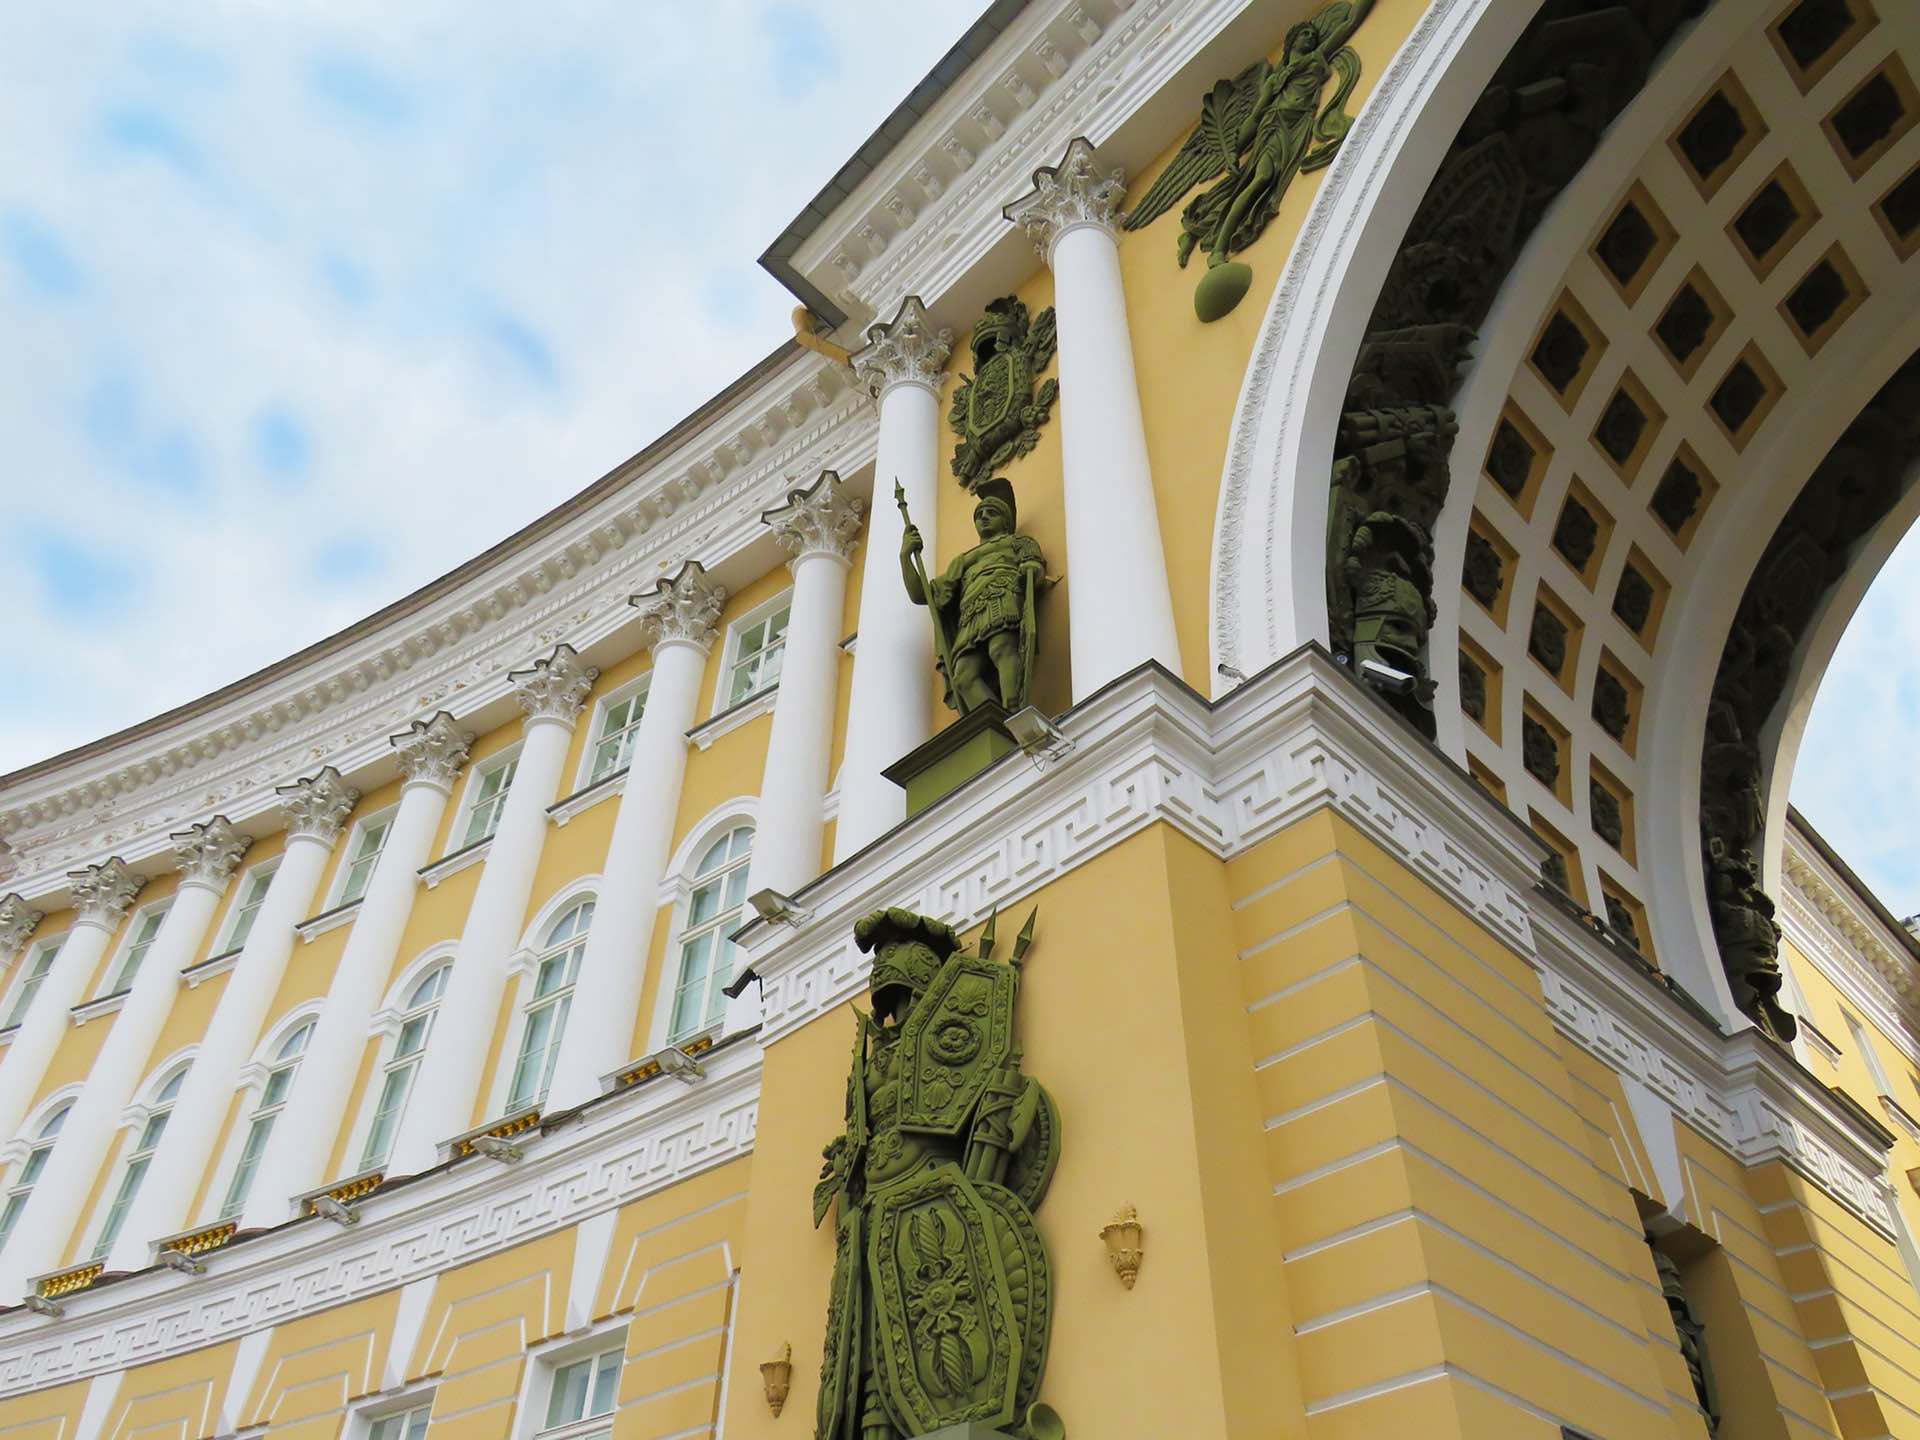 rch of General Staff Building in St. Petersburg 2